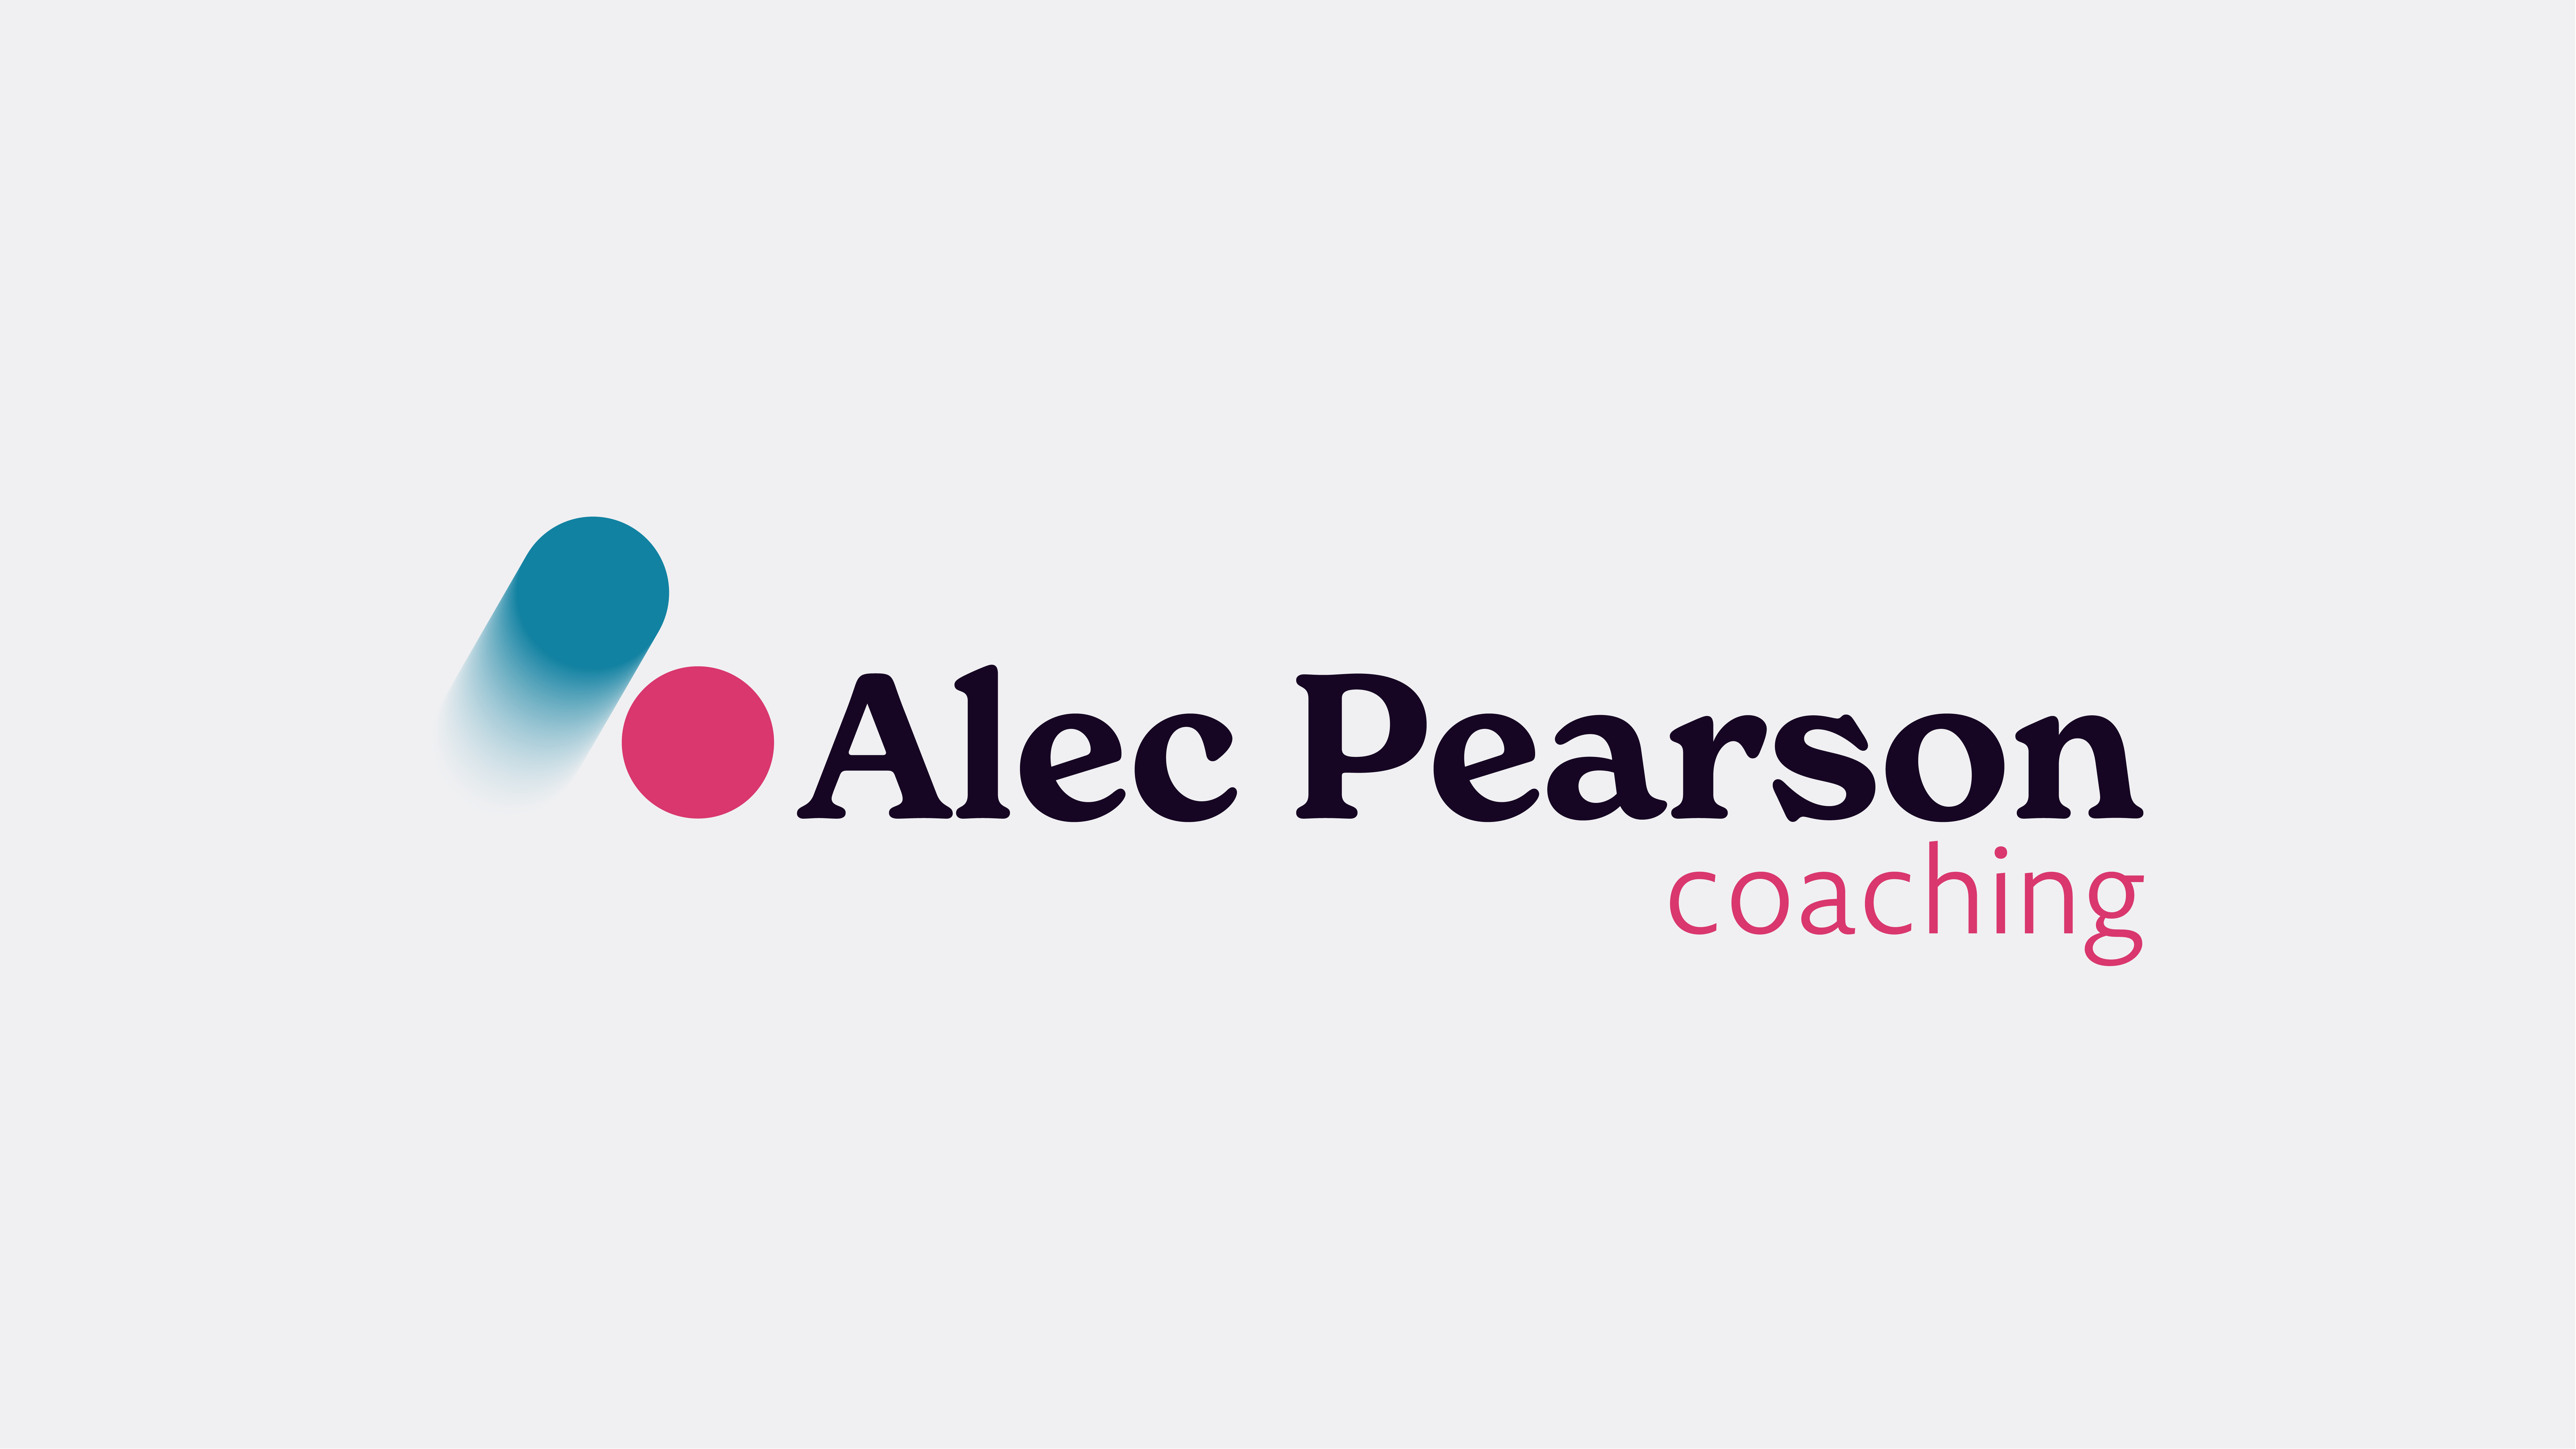 Alec Pearson Coaching Logos Blue & Pink Background